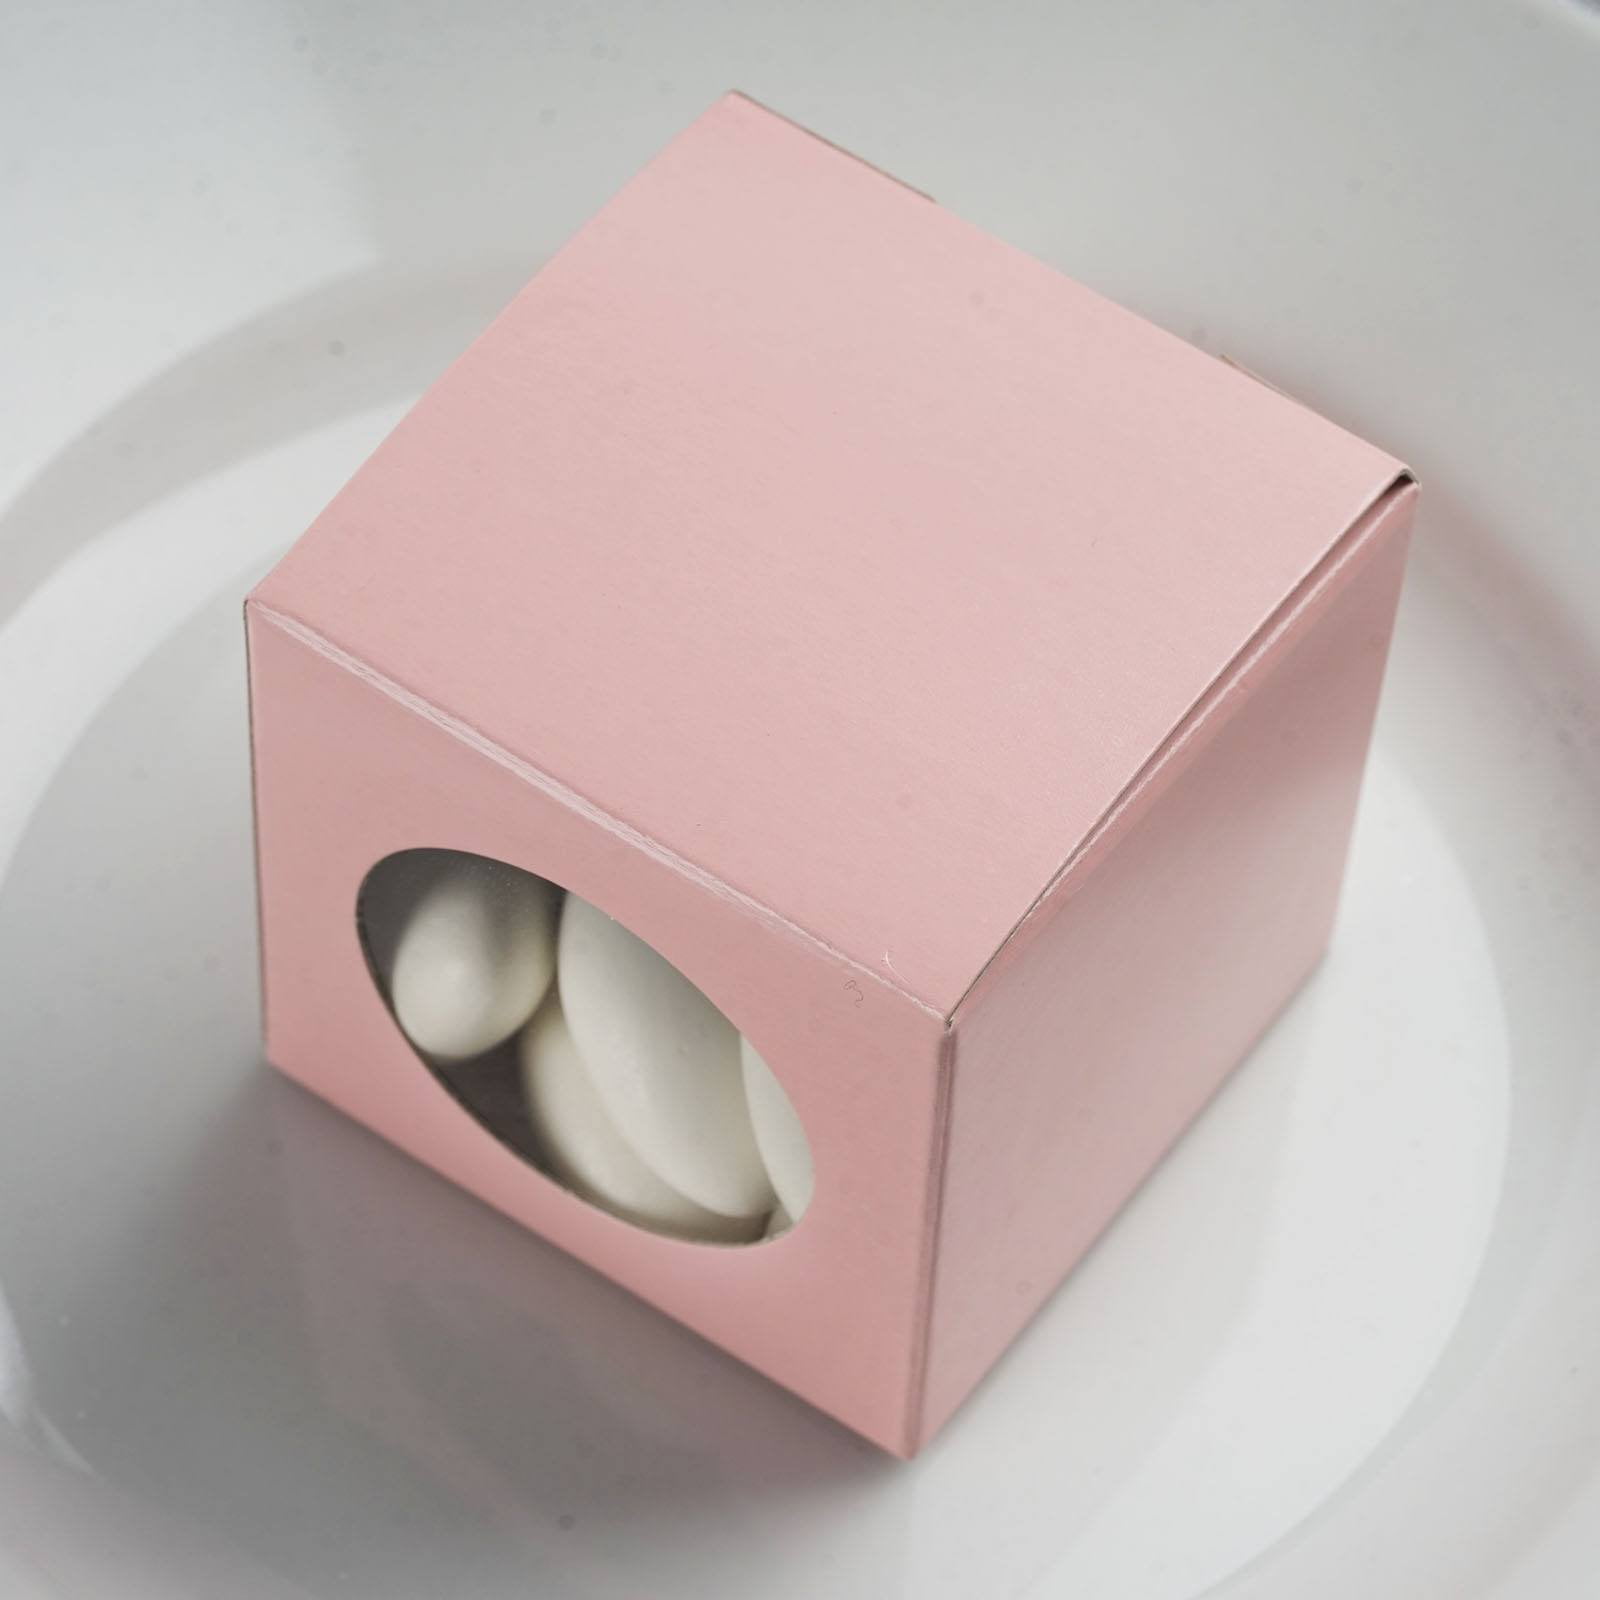 Efavormart 2x2 Ballotin Box For Candy Treat T Wrap Box Party Favor